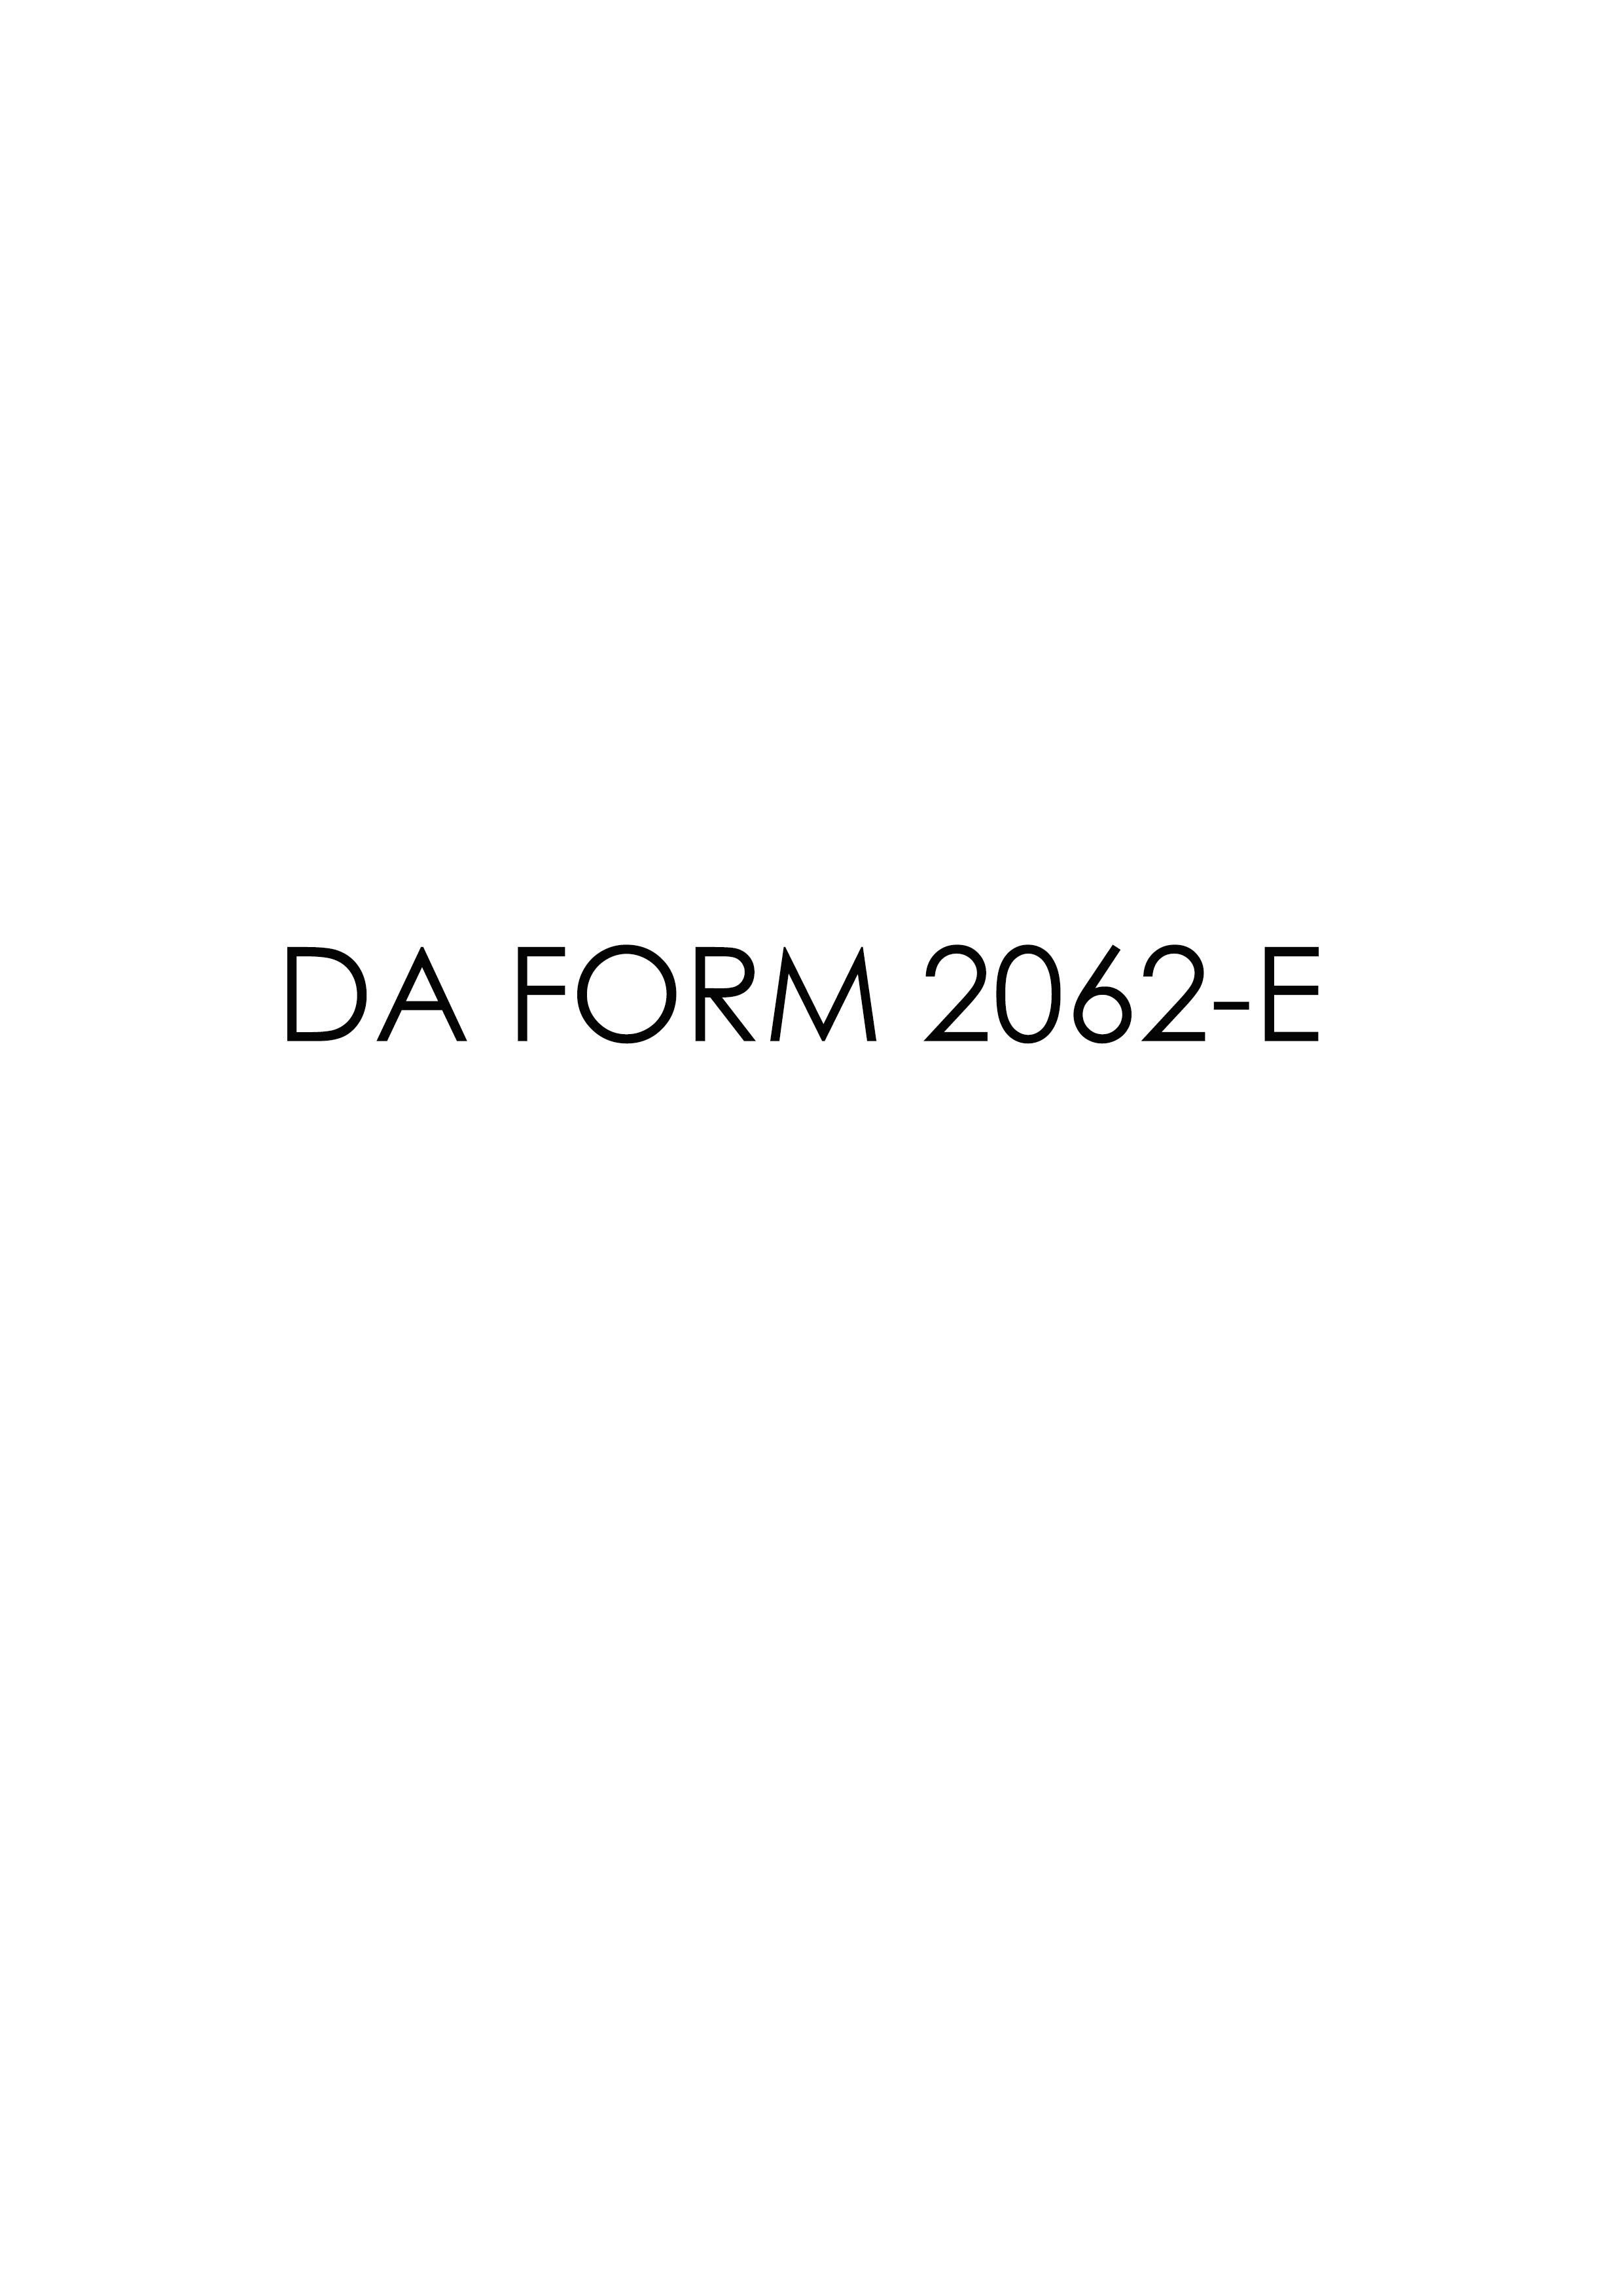 da Form 2062-E fillable